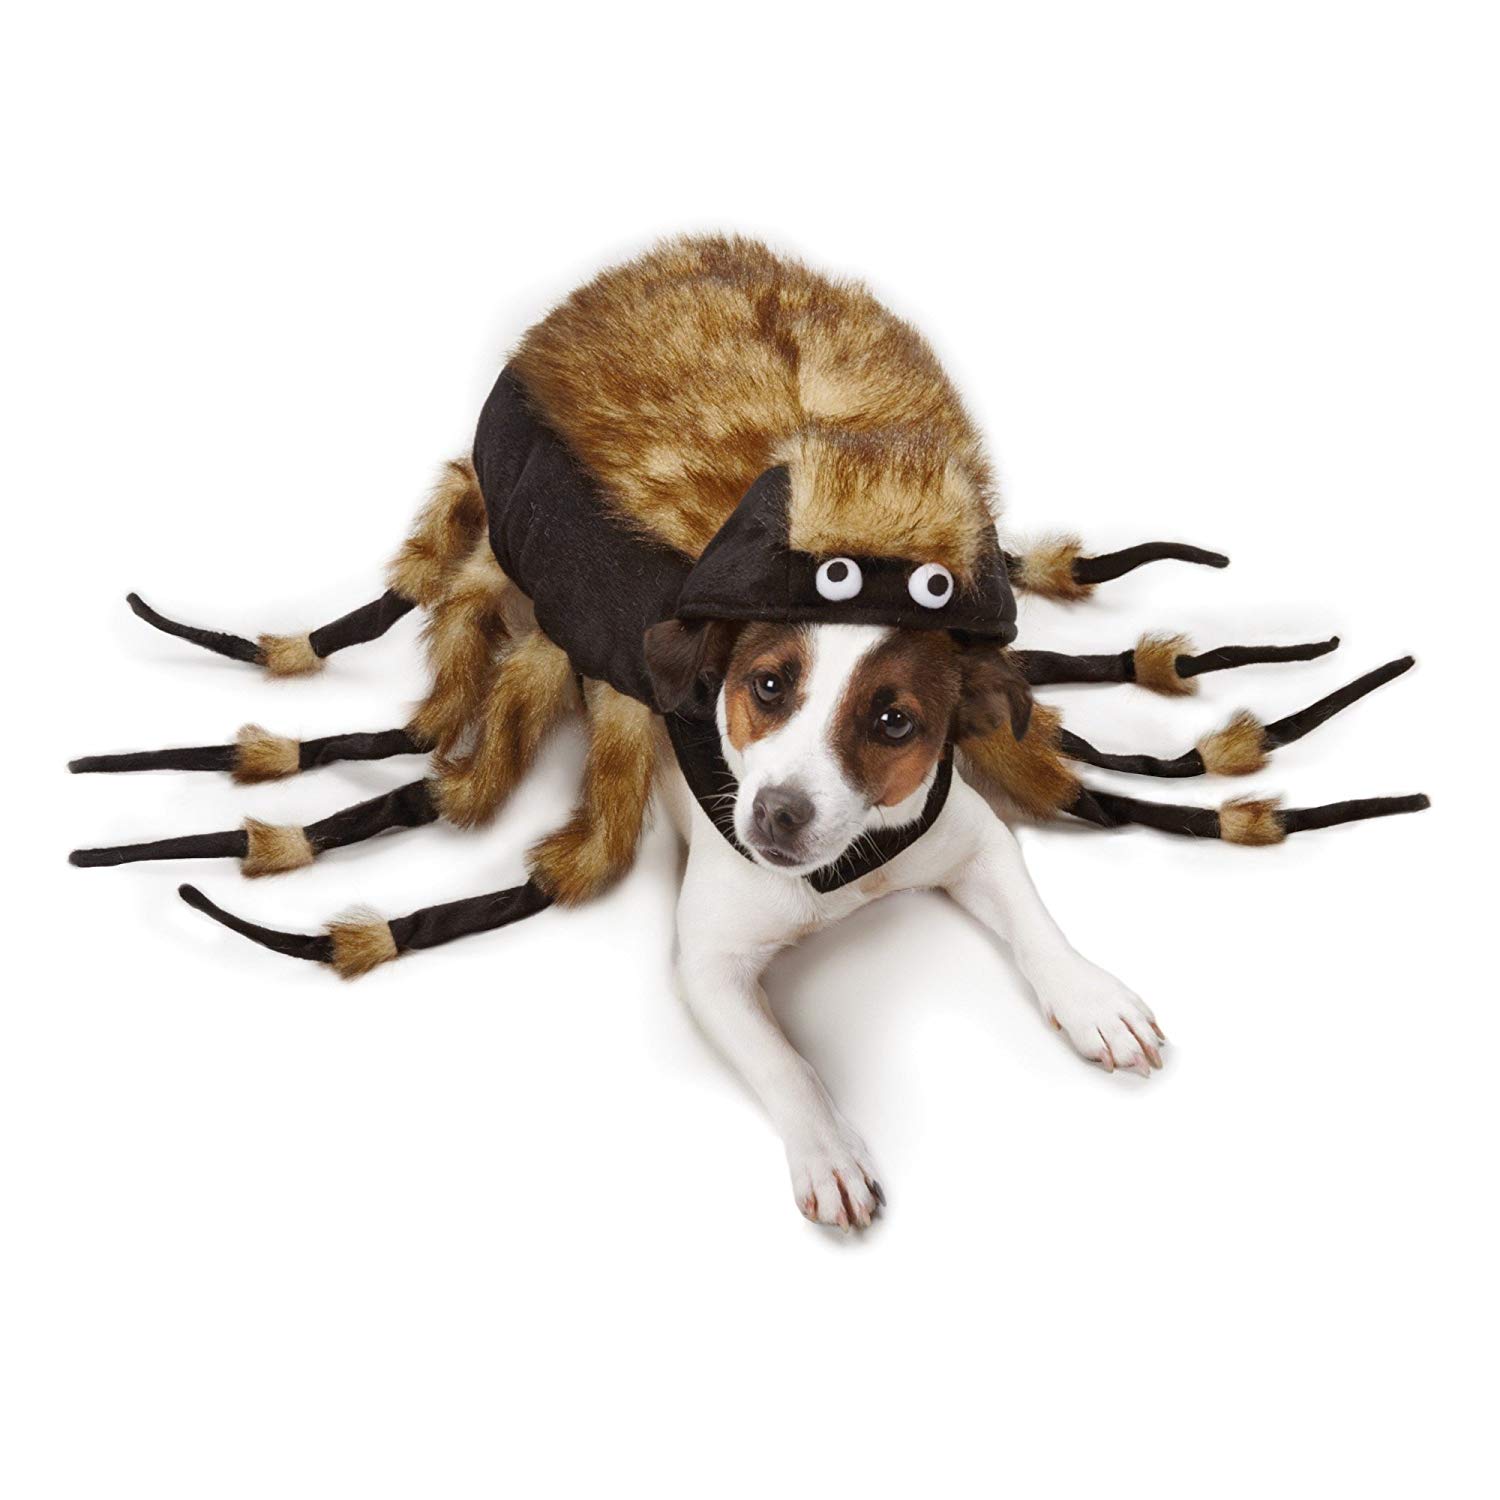 Jack Russel Terrier in Fuzzy Tarantula costume